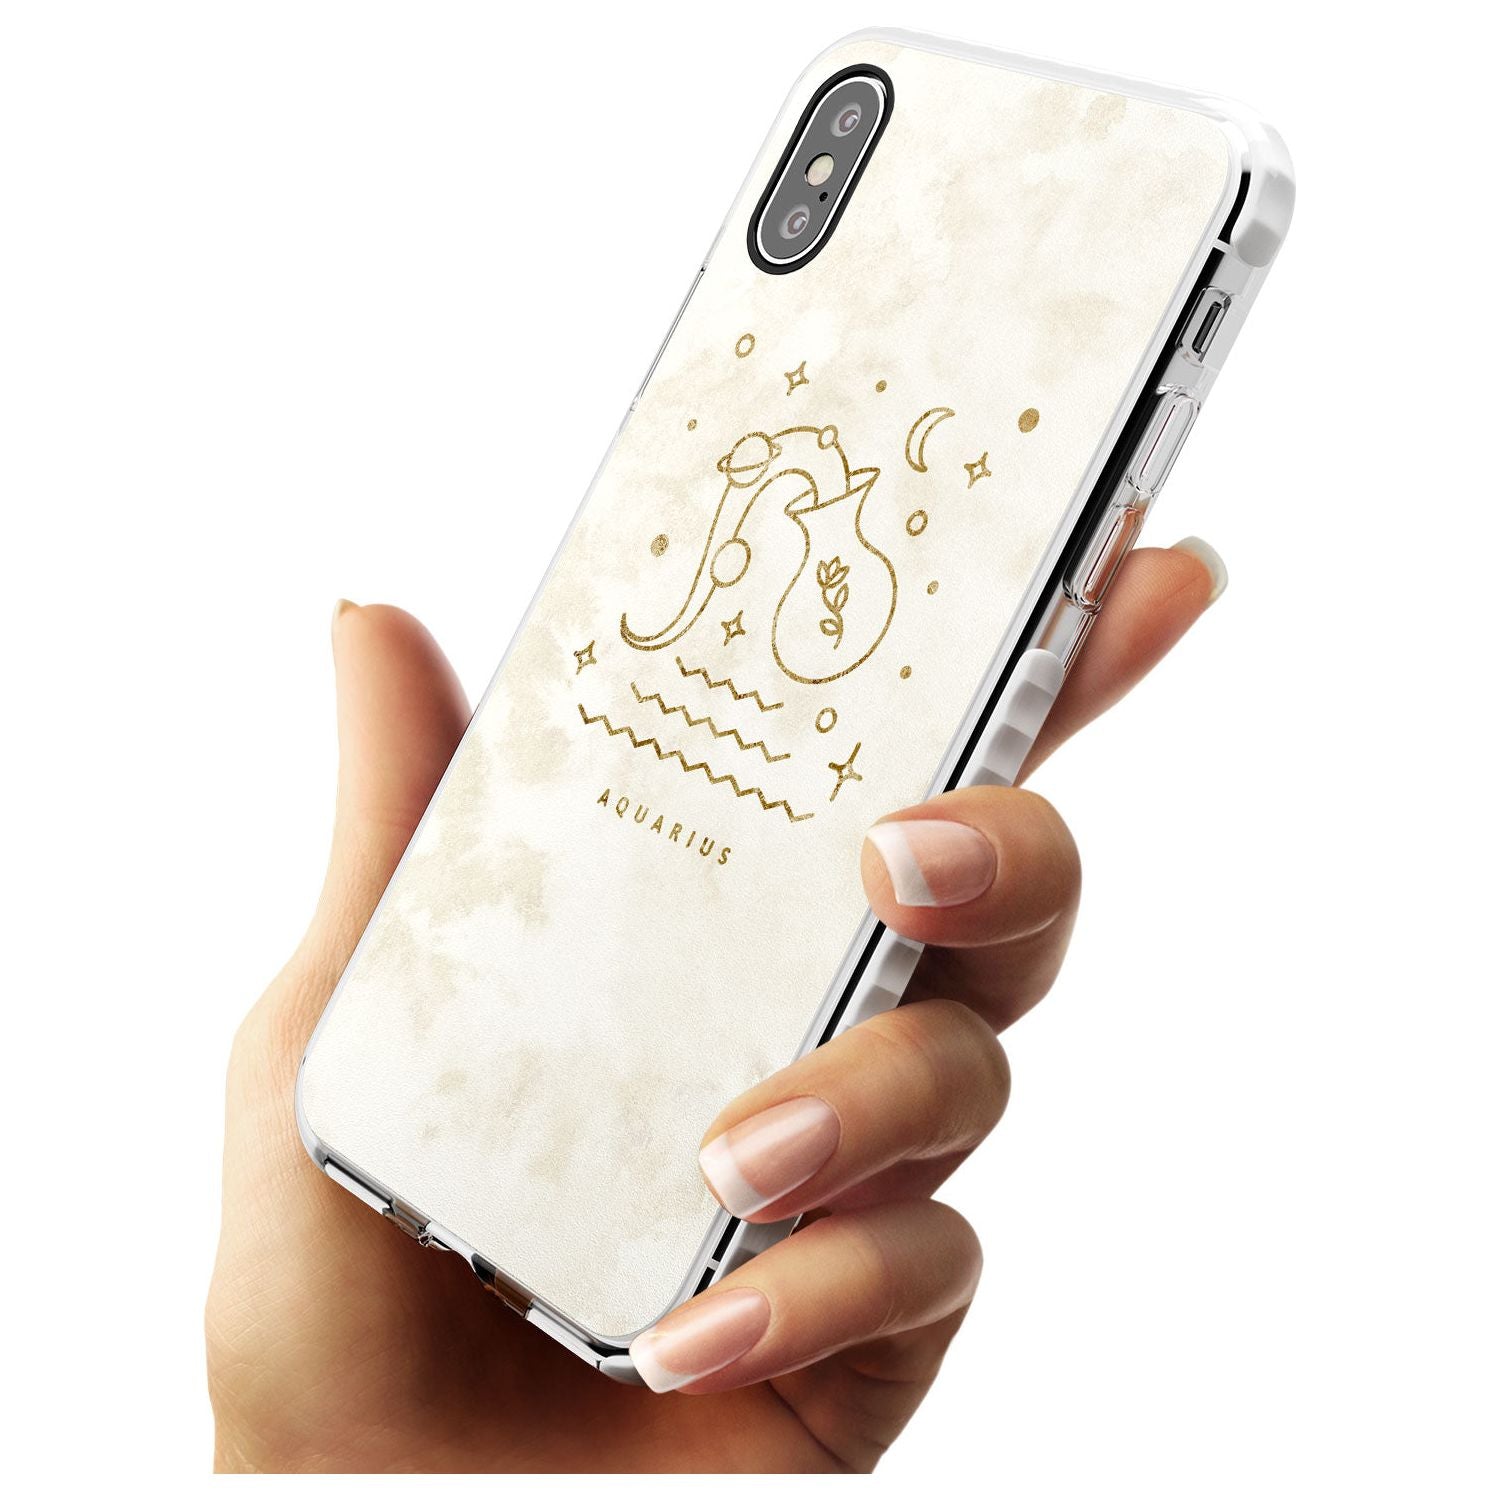 Aquarius Emblem - Solid Gold Marbled Design Impact Phone Case for iPhone X XS Max XR